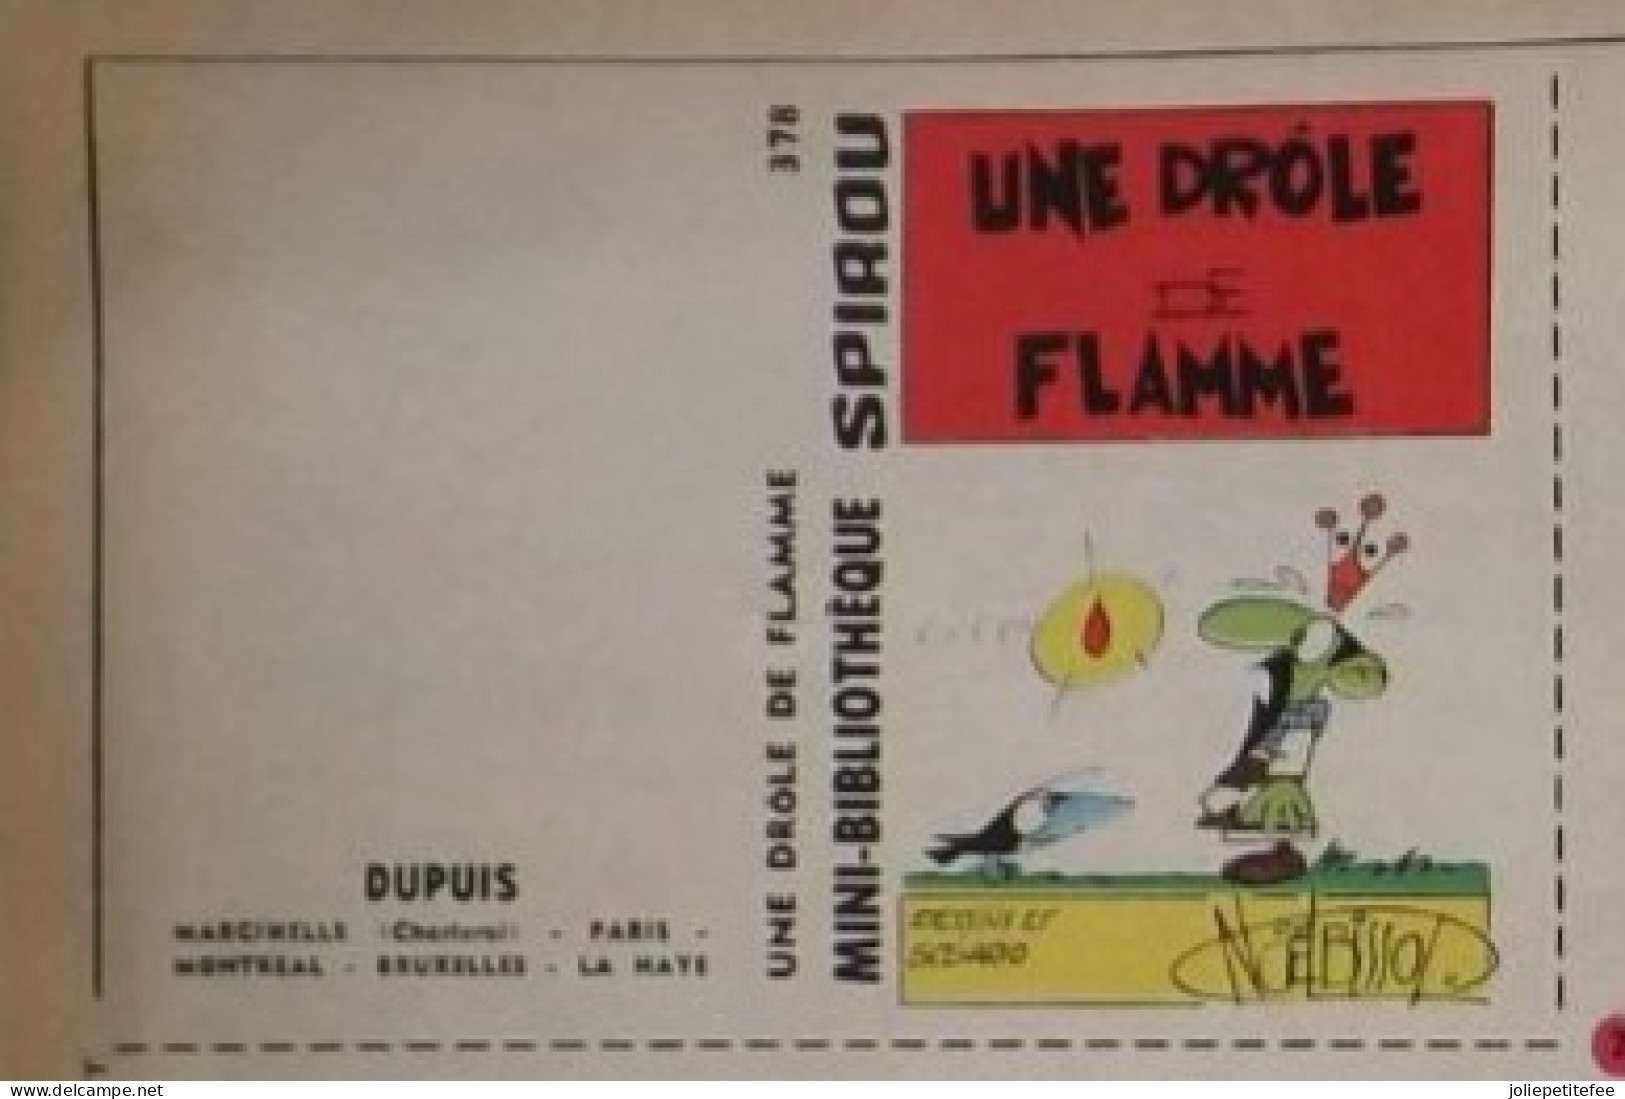 Mini-Bibliothèque.  "378 - UNE DROLE DE FLAMME".   NOEL BISSOL.    Spirou  N°1342   7/9/1967. - Spirou Magazine